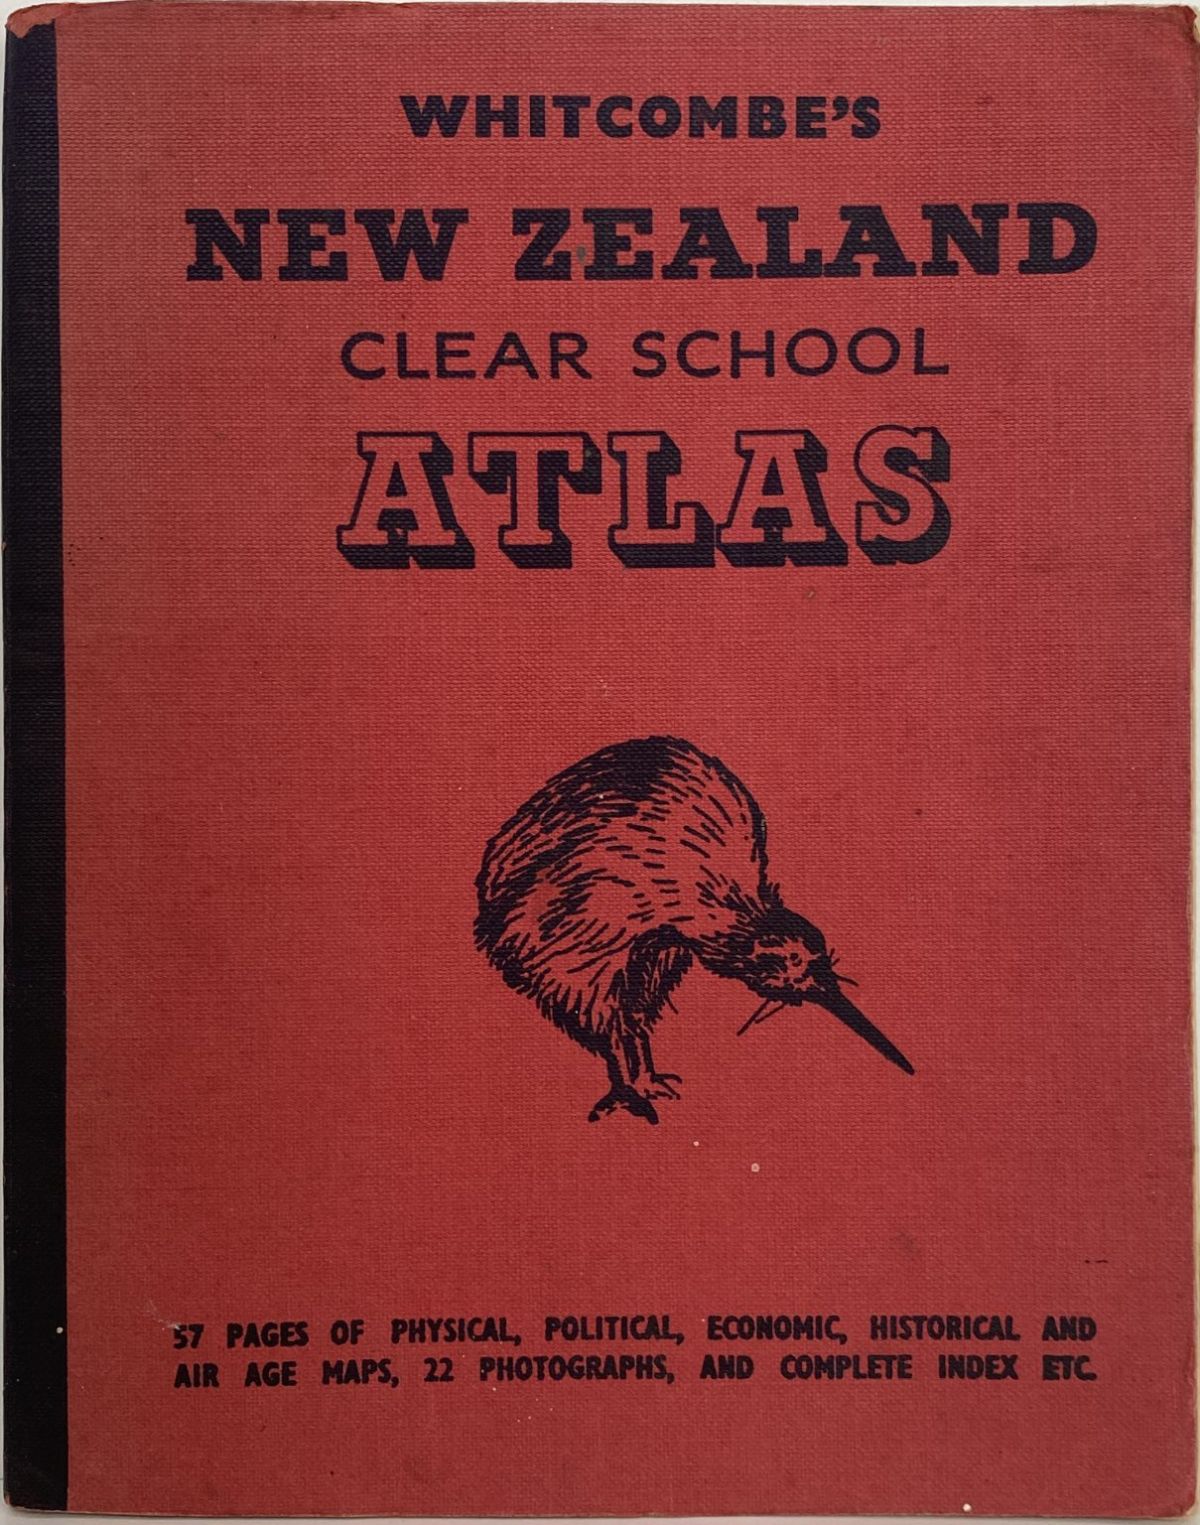 Whitcombe's New Zealand Clear School Atlas 1956